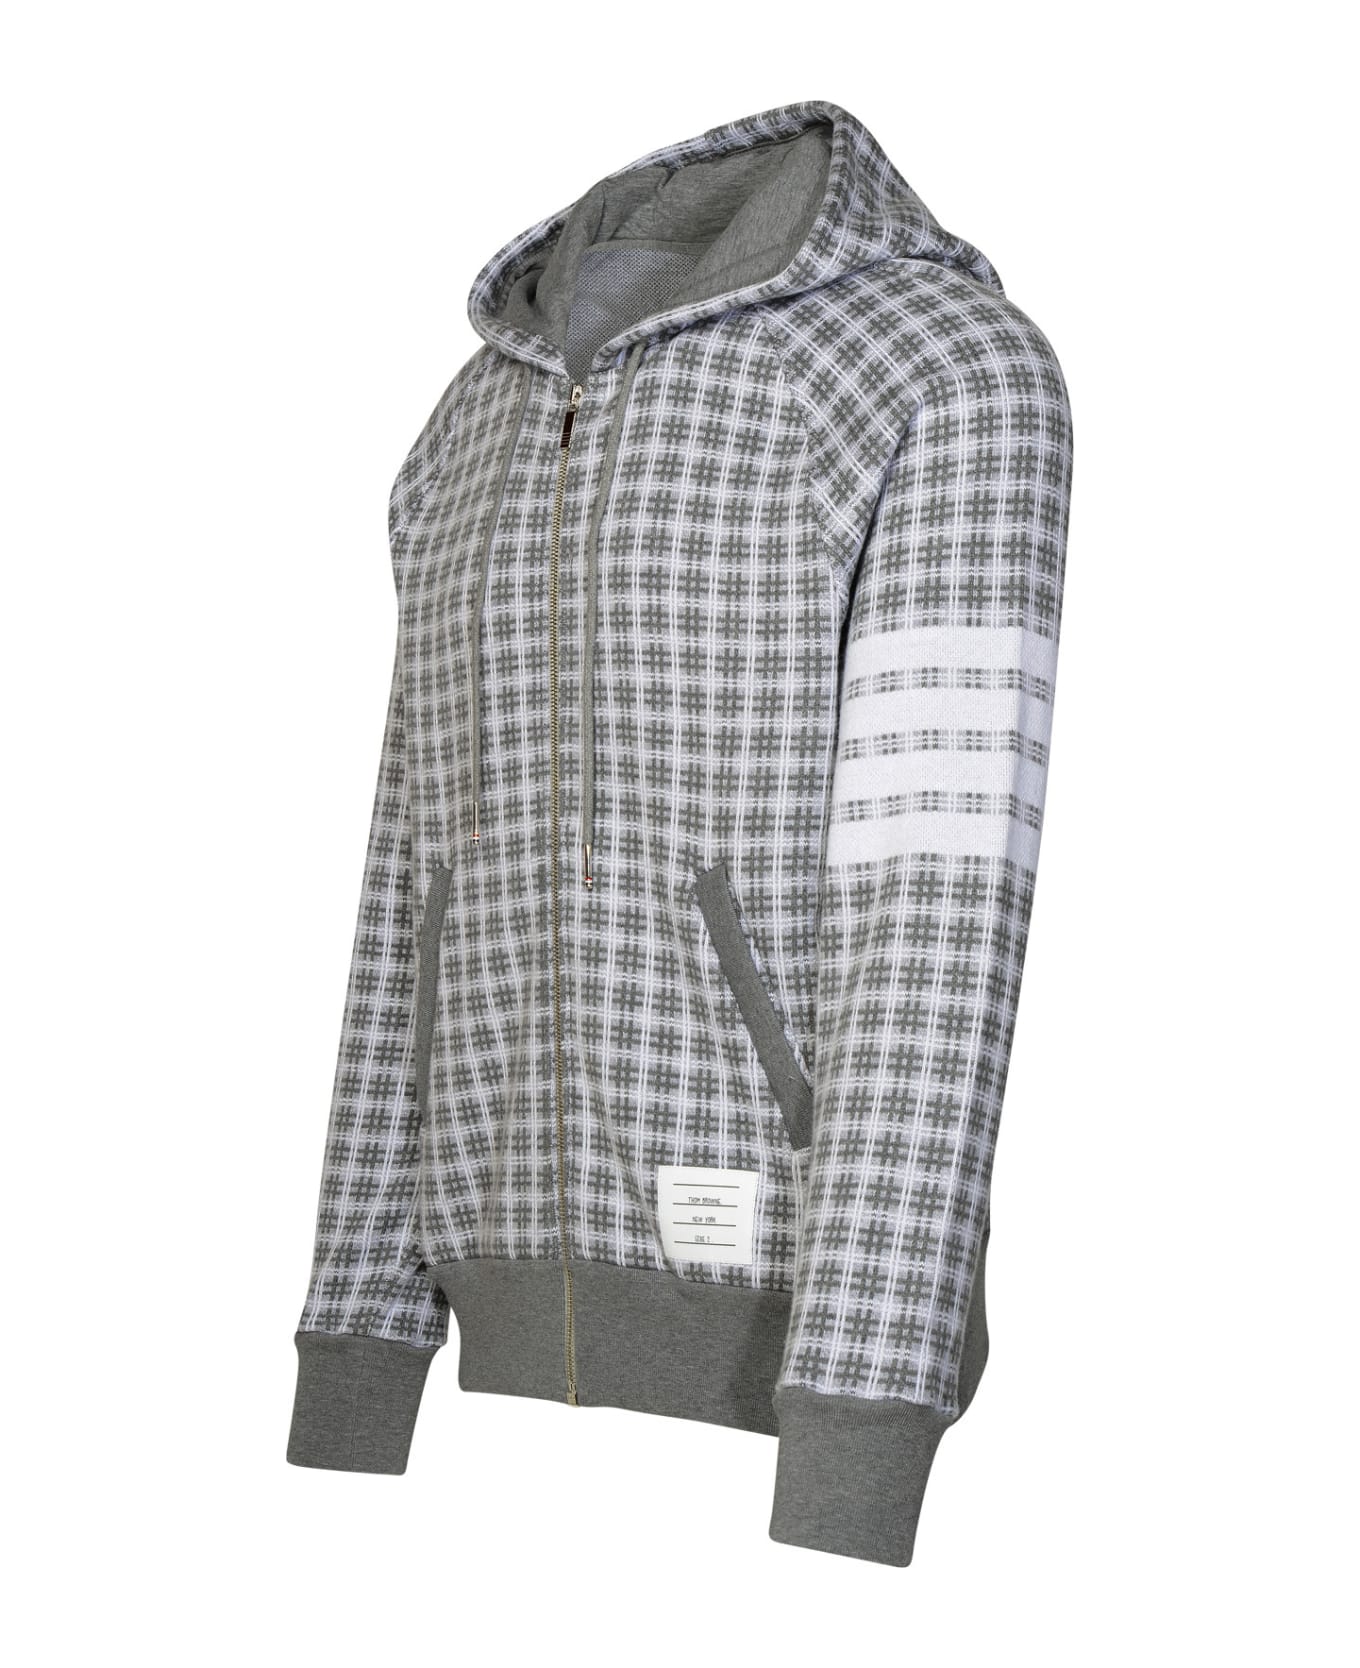 Thom Browne Gray Cotton Sweatshirt - Grey